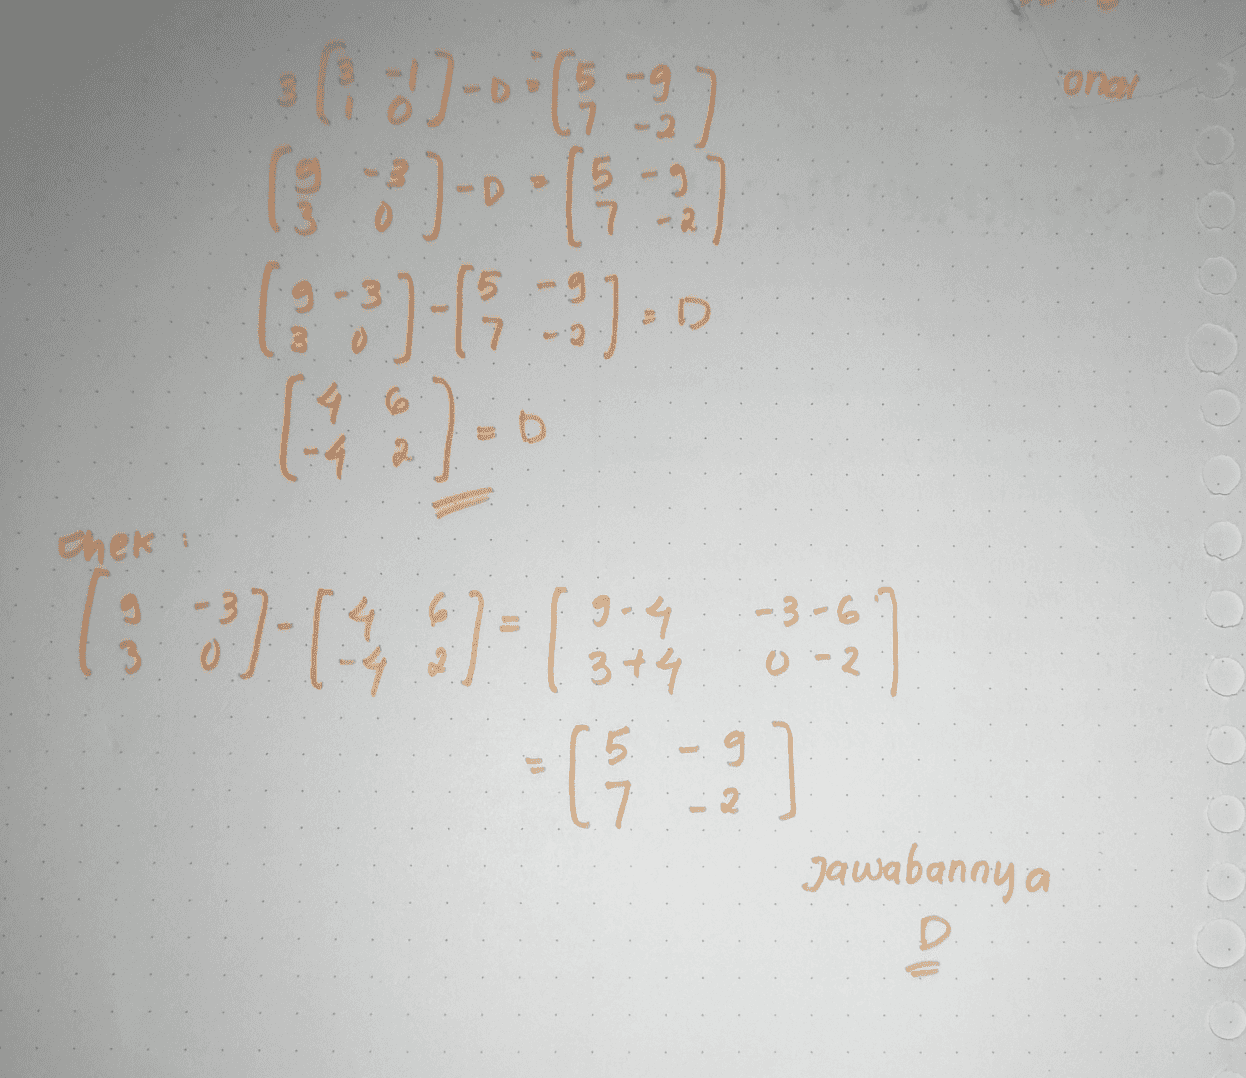 onai si-0765-3) (83)-() (3) 6-3) D -4 -4.2. Chek 964 3+4 -3.-6 0-2 (3 31-143] -6) jawabannya D 